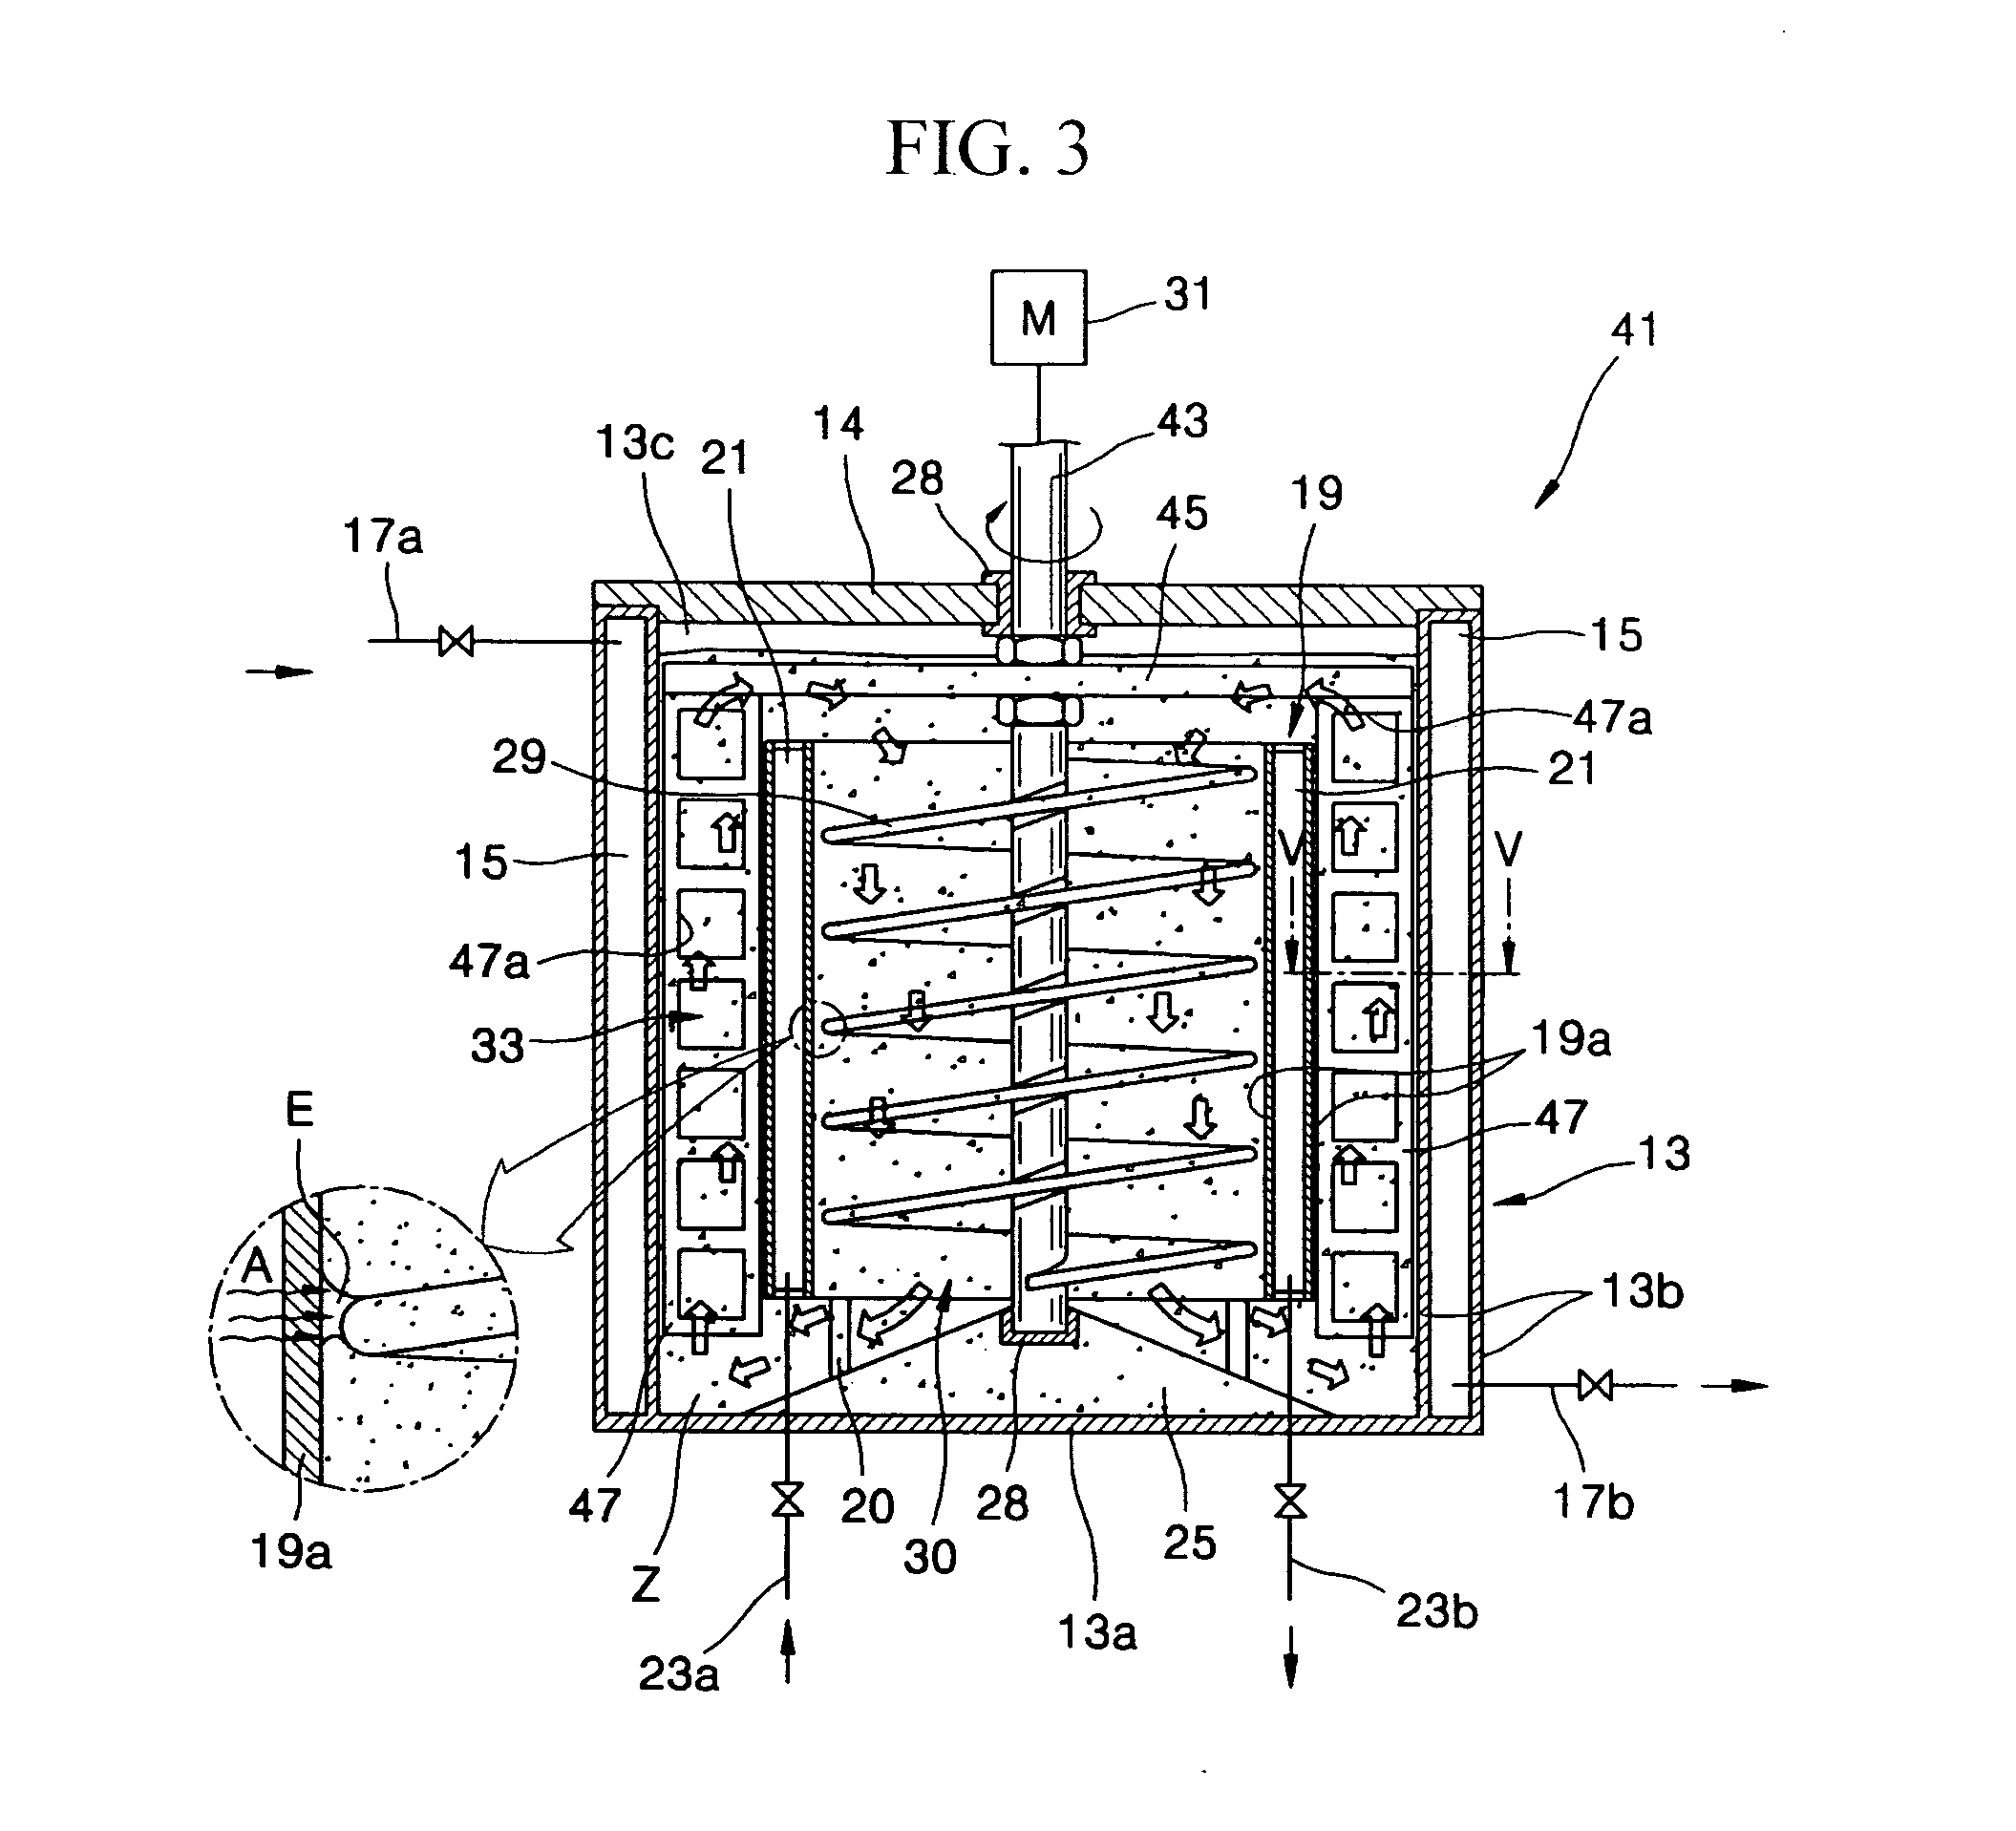 Apparatus for mixing viscous material